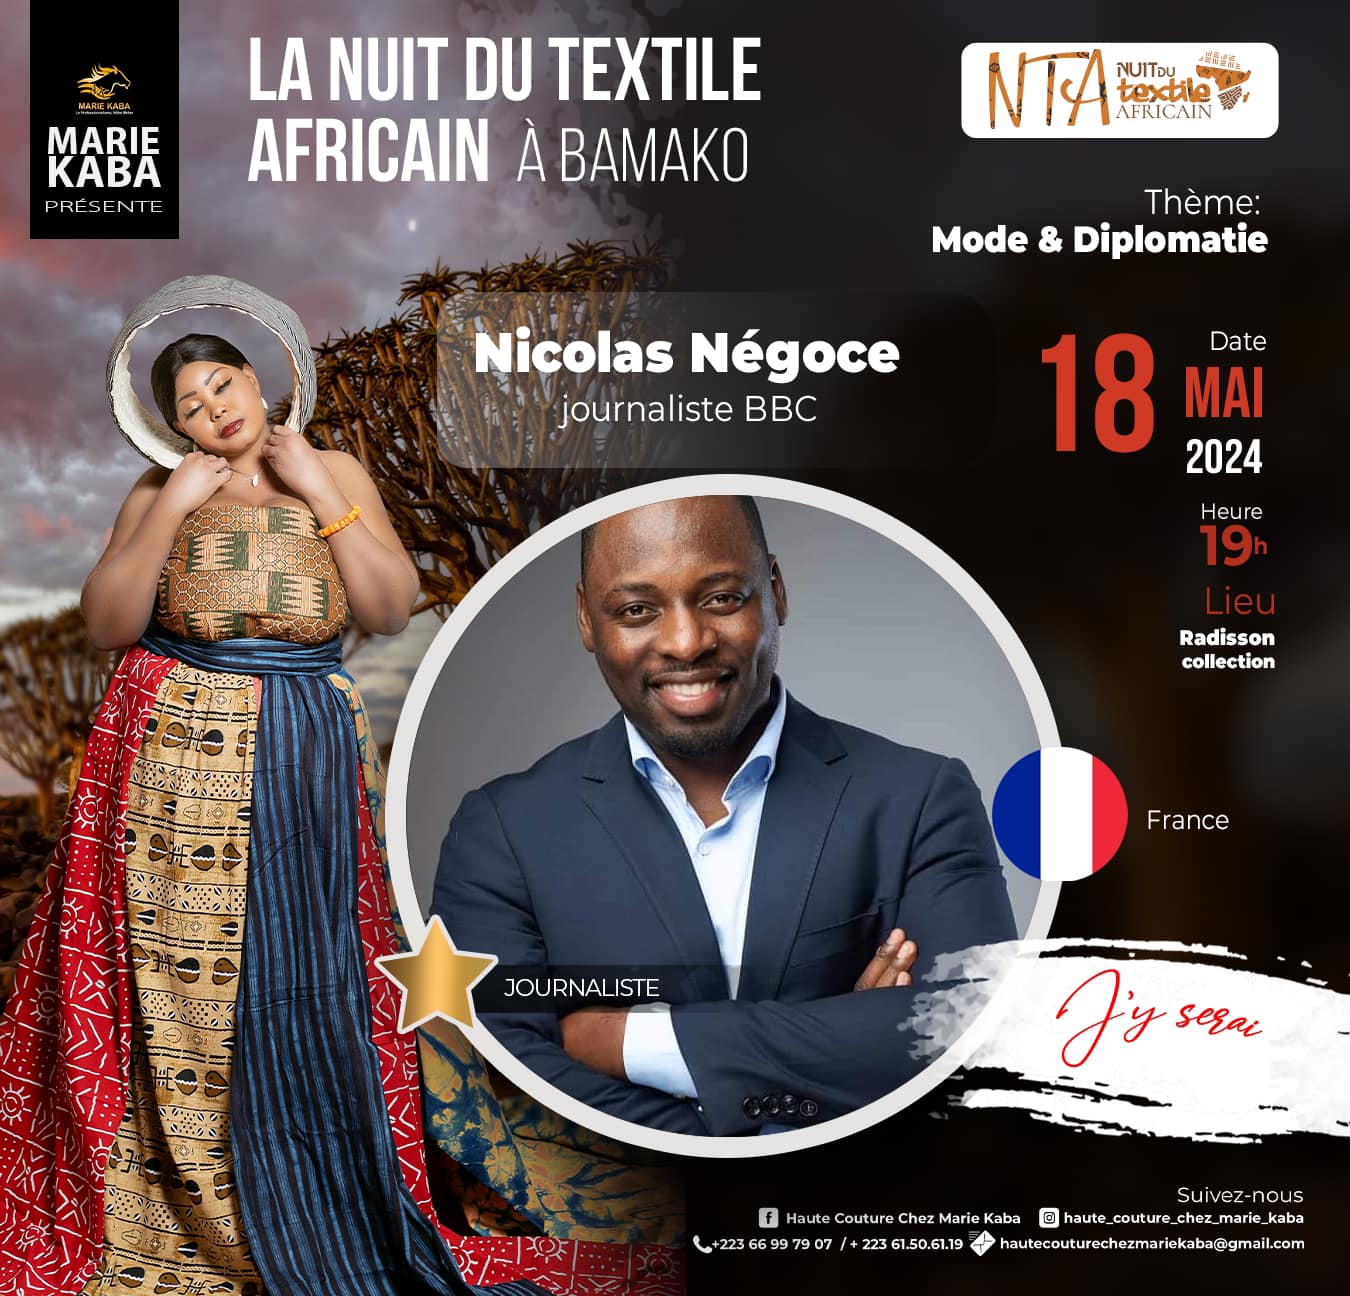 Media Partner - LA NUIT DU TEXTILE AFRICAIN A BAMAKO presents Nicolas NEGOCE - Journalist from France